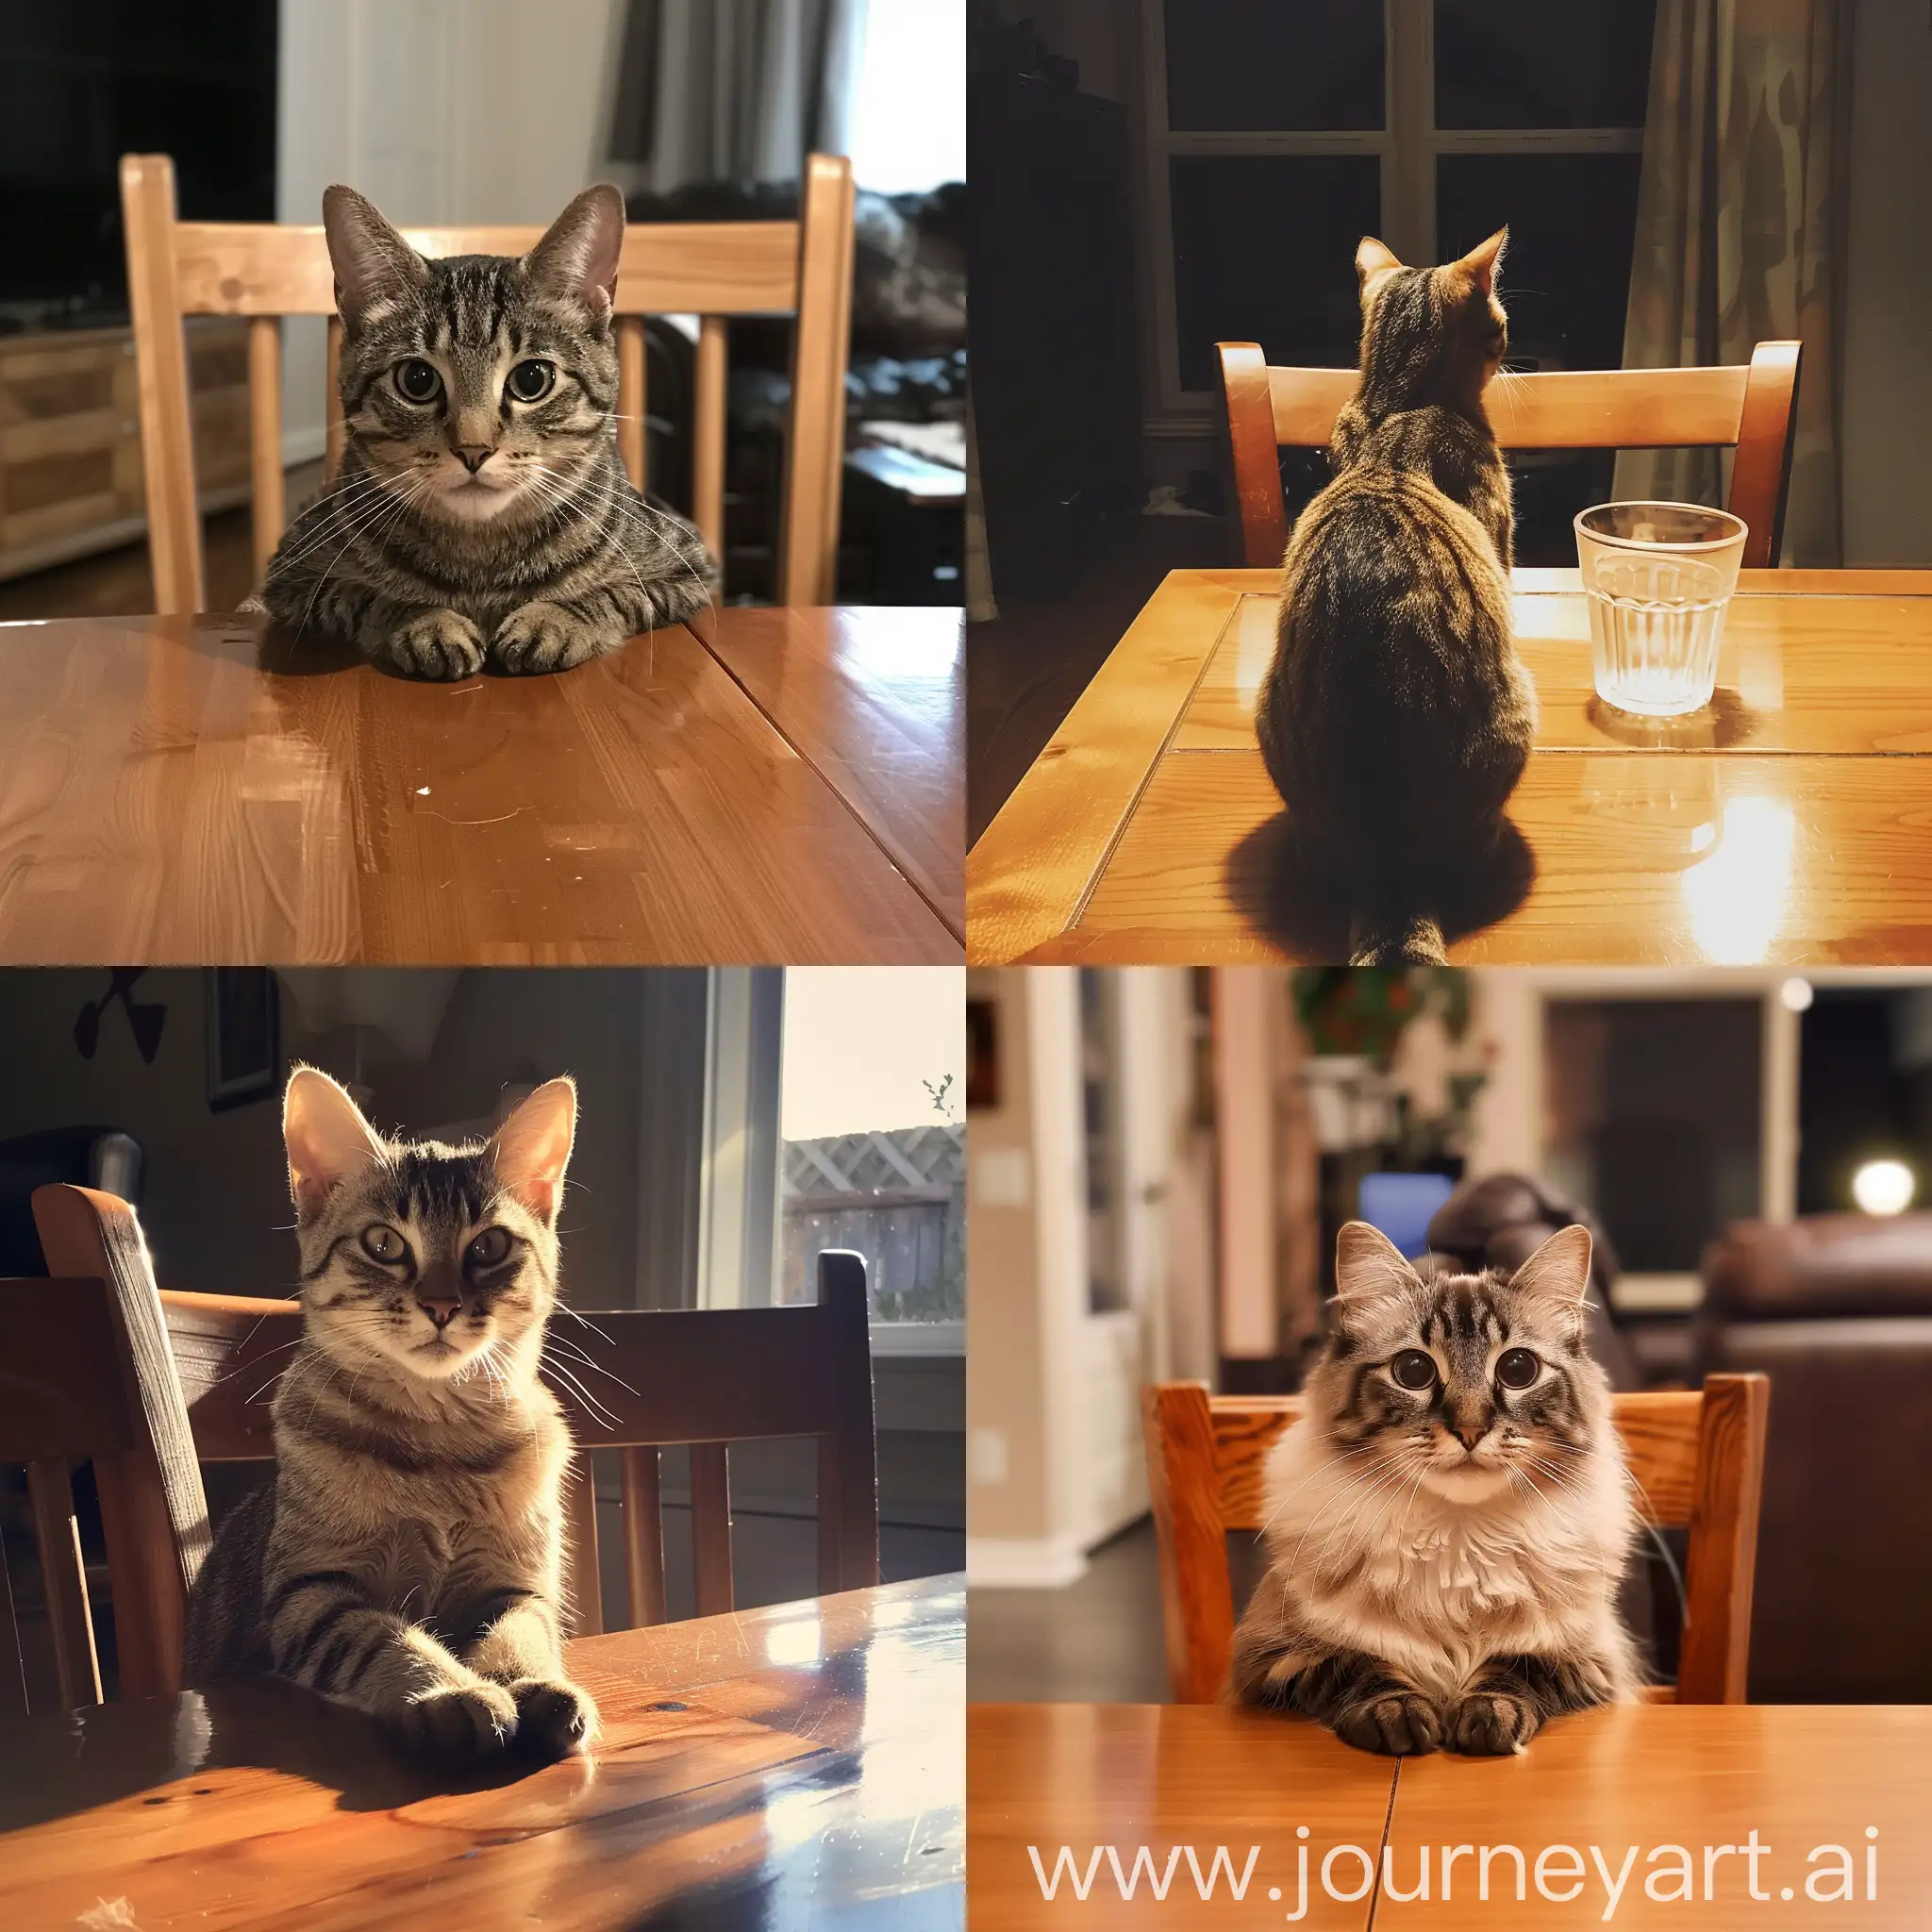 Cat-Sitting-at-Table-Cute-Feline-Mimicking-Human-Behavior